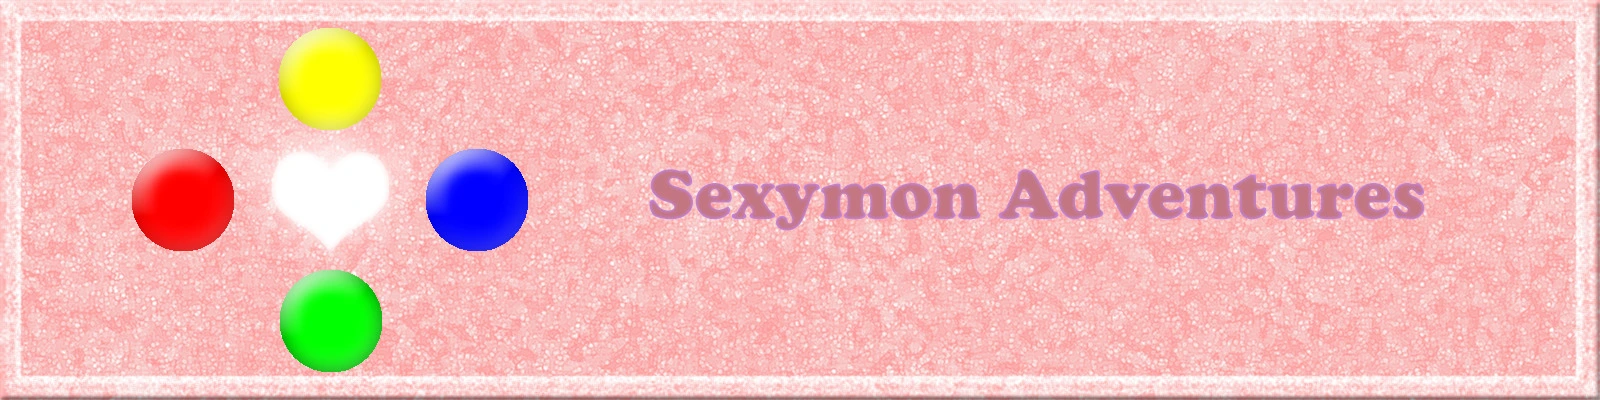 Sexymon Adventures [v0.06] main image